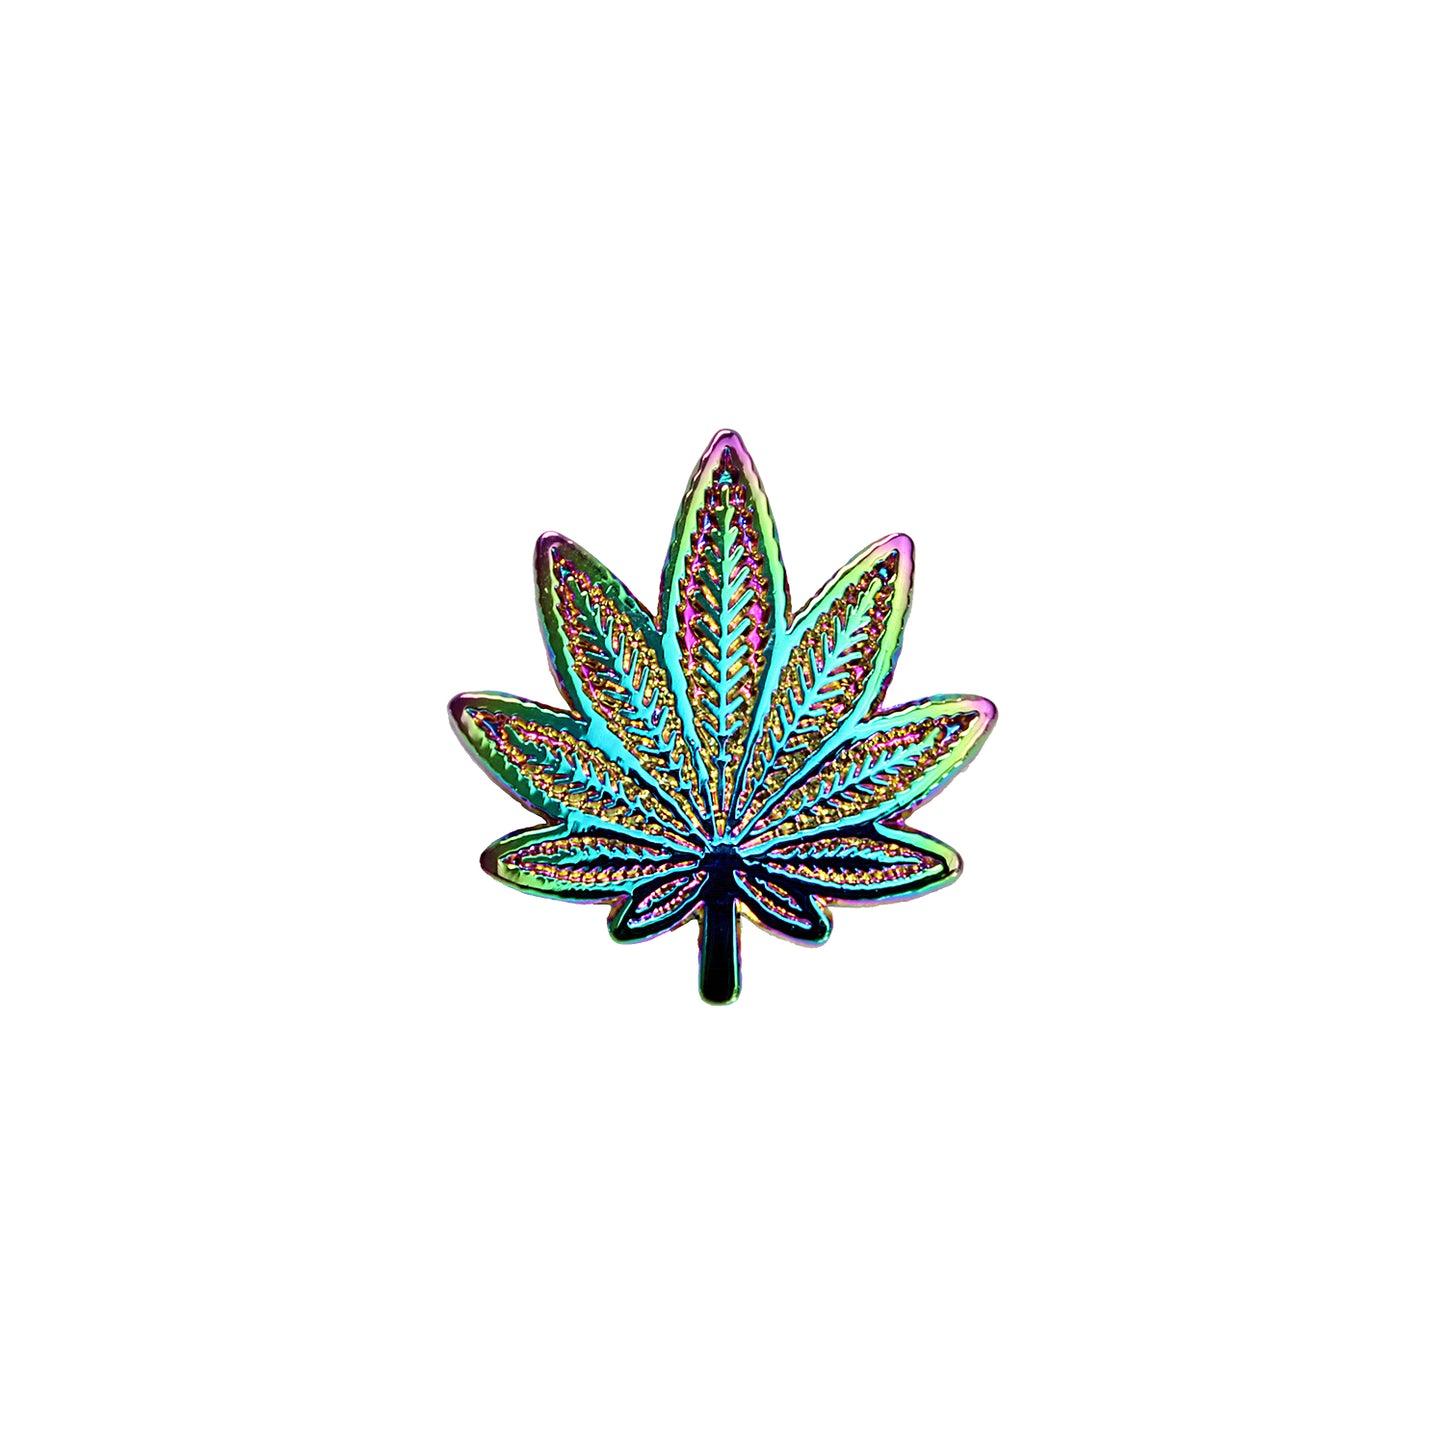 Pot Leaf Pin